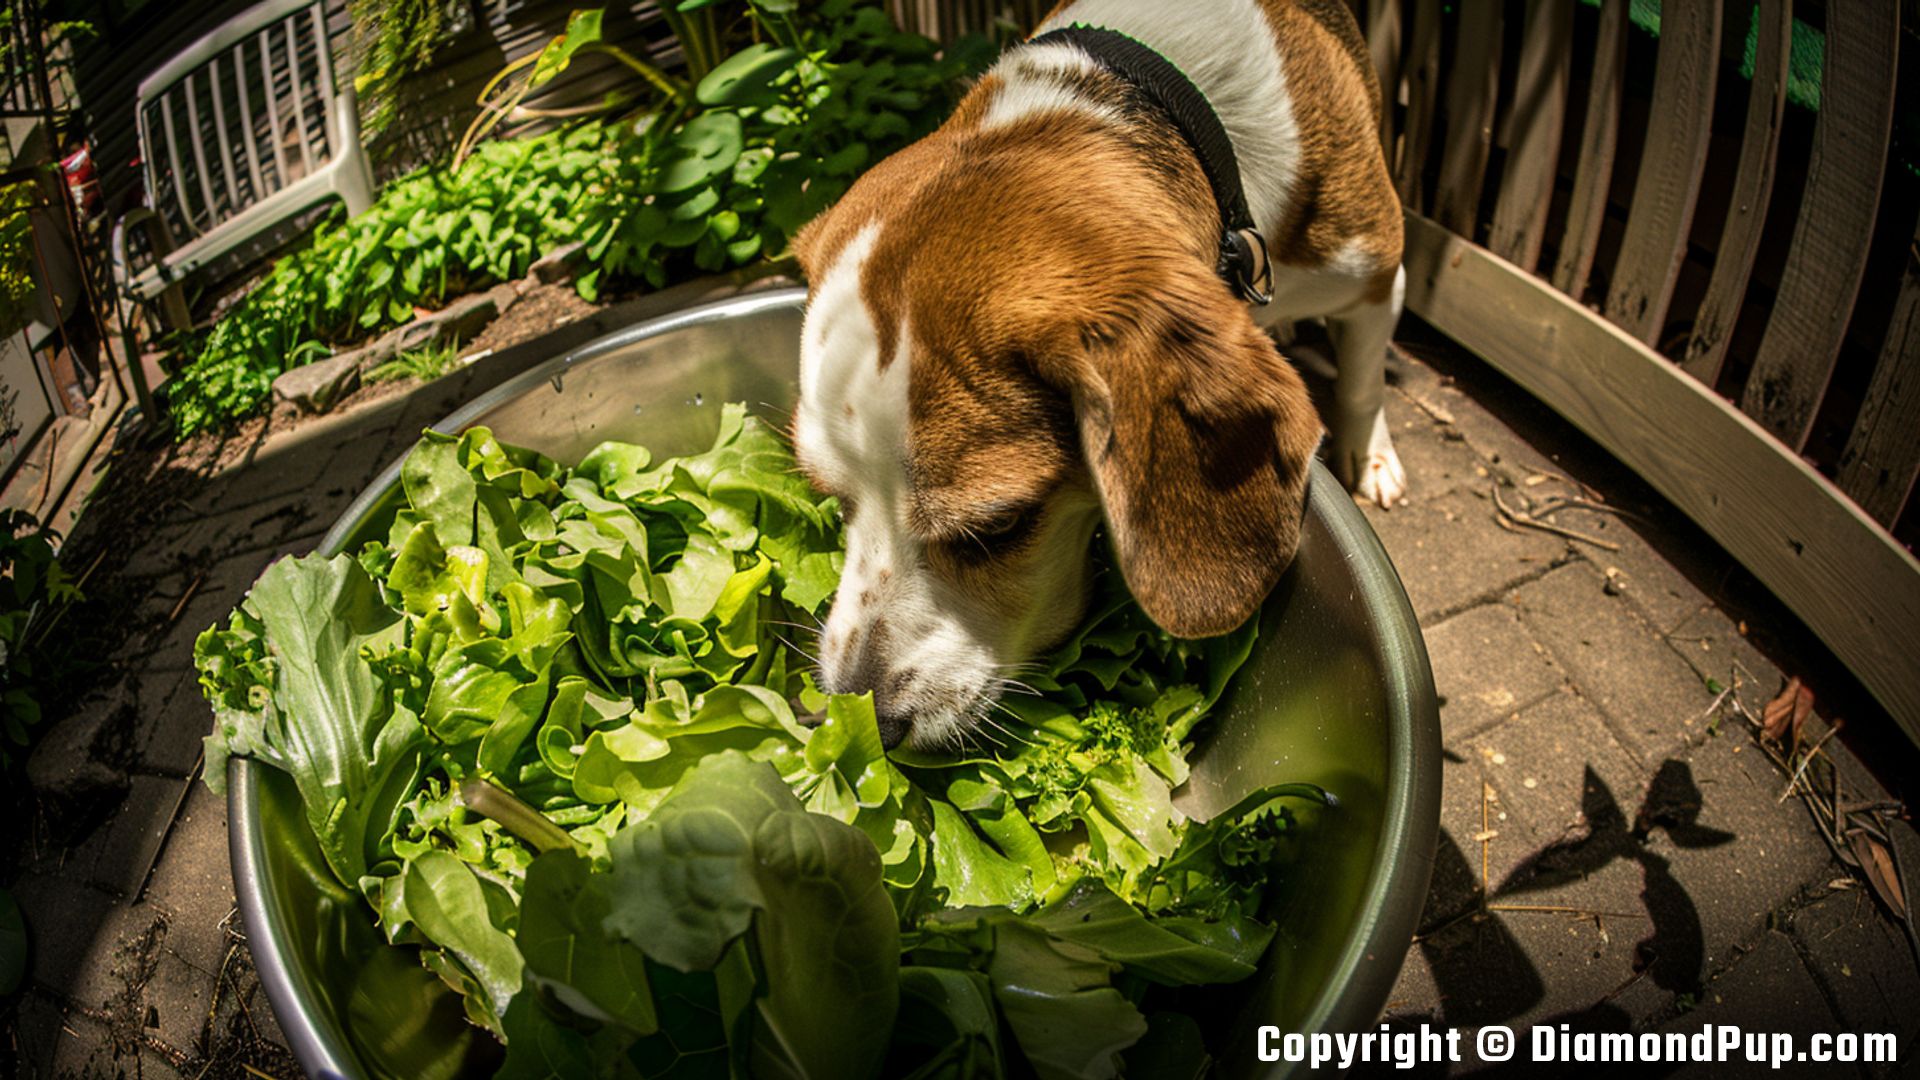 Photograph of an Adorable Beagle Eating Lettuce